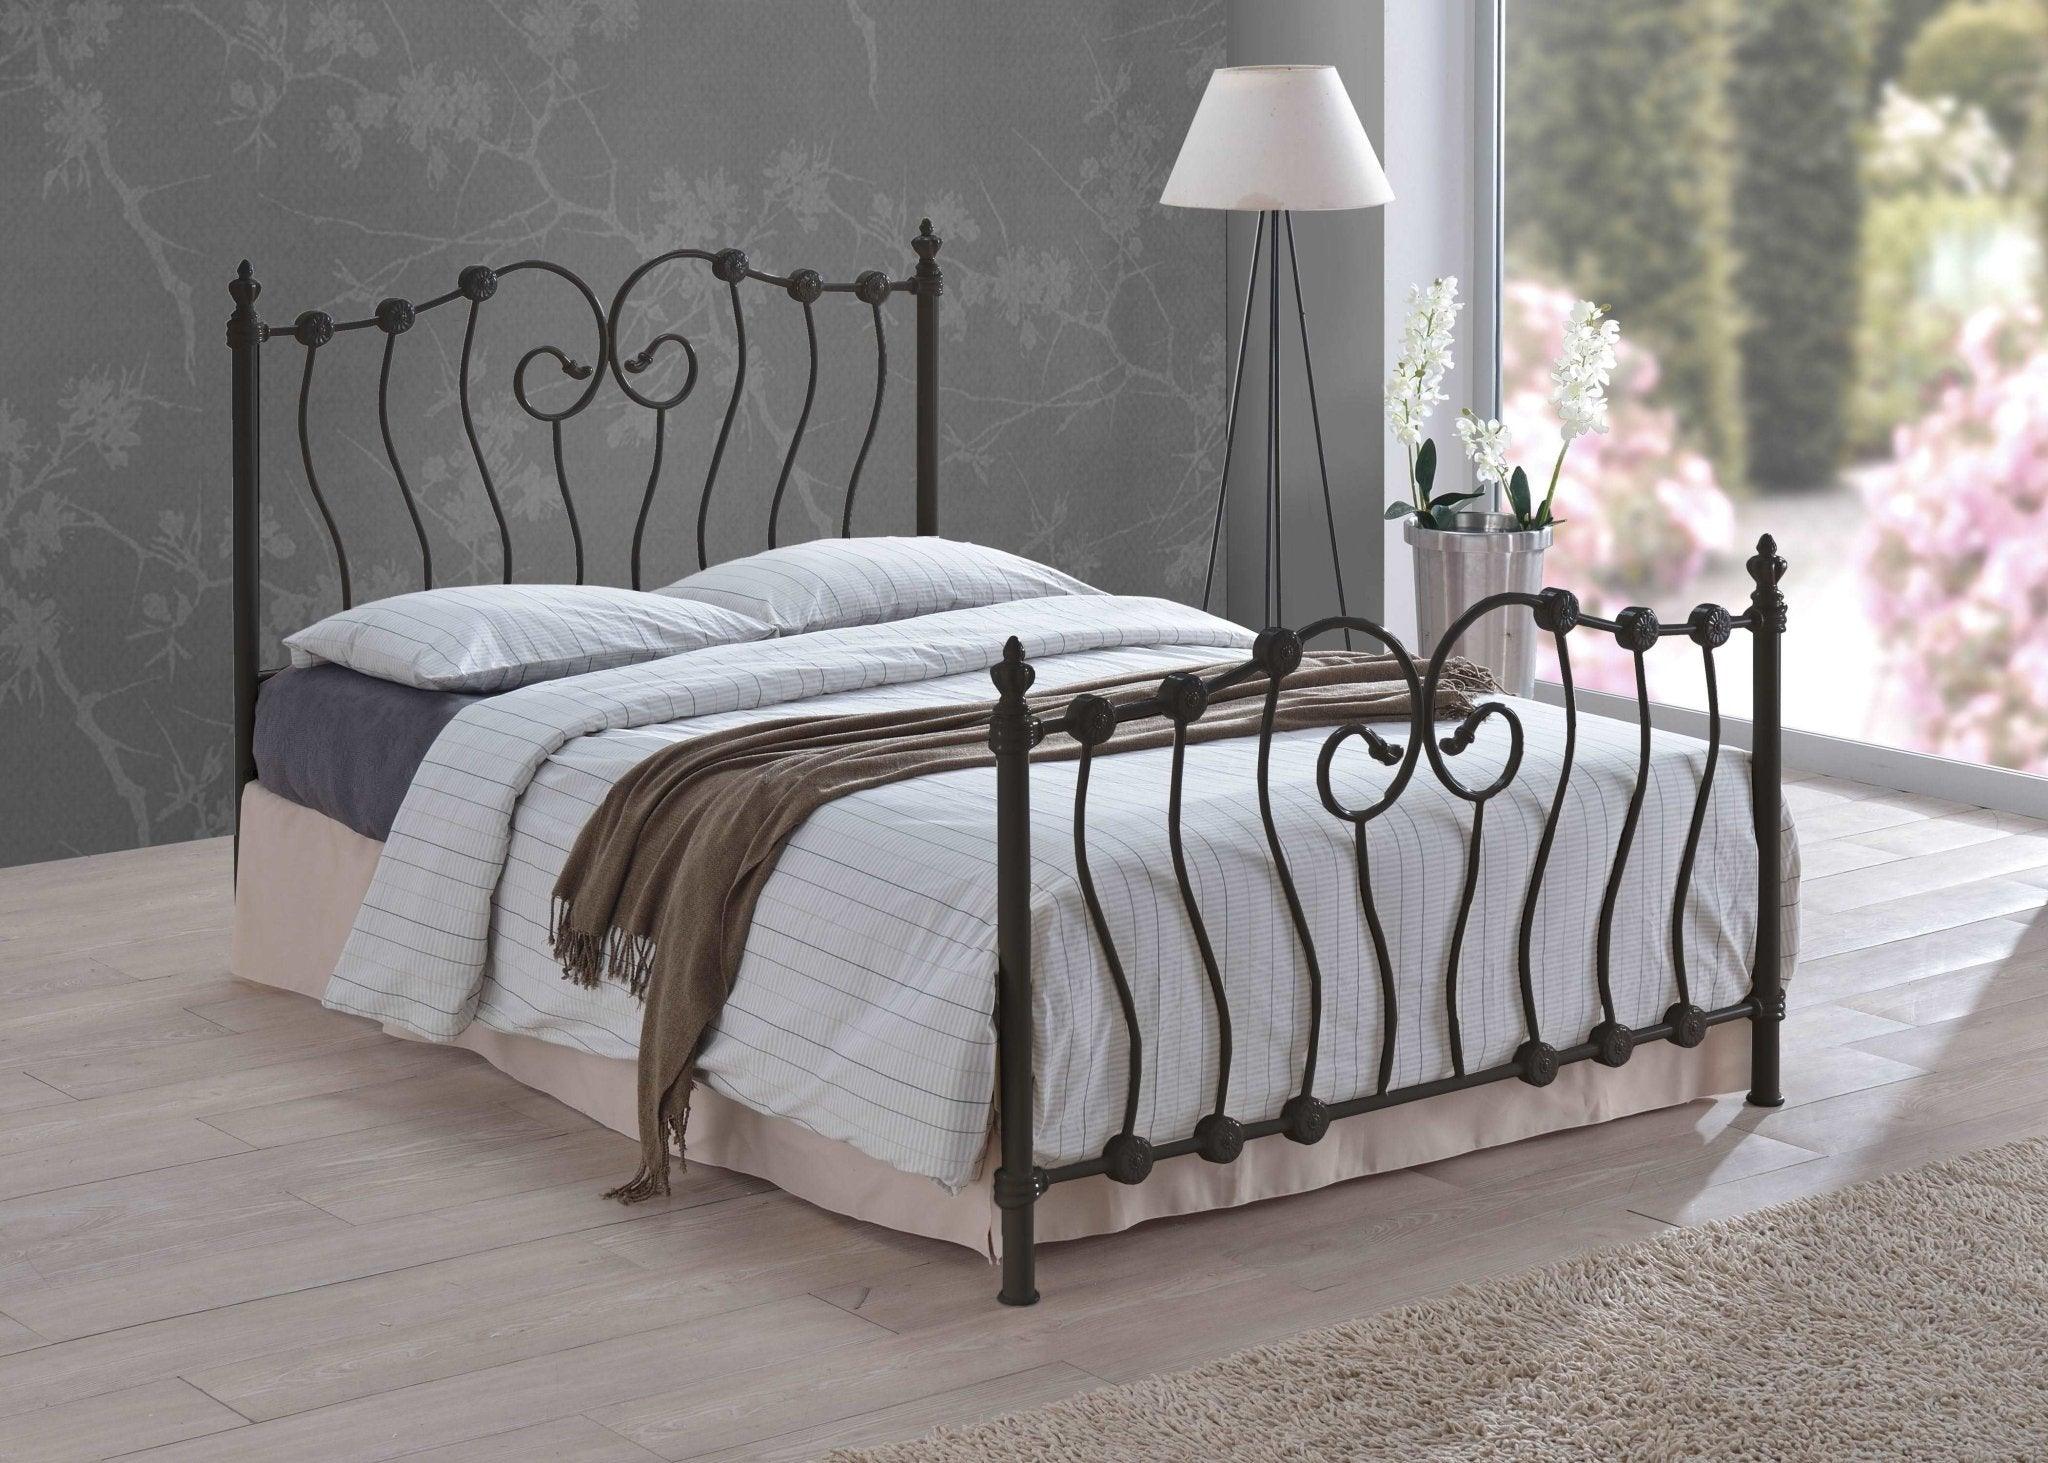 Inova Metal Bed Frame - loveyourbed.co.uk